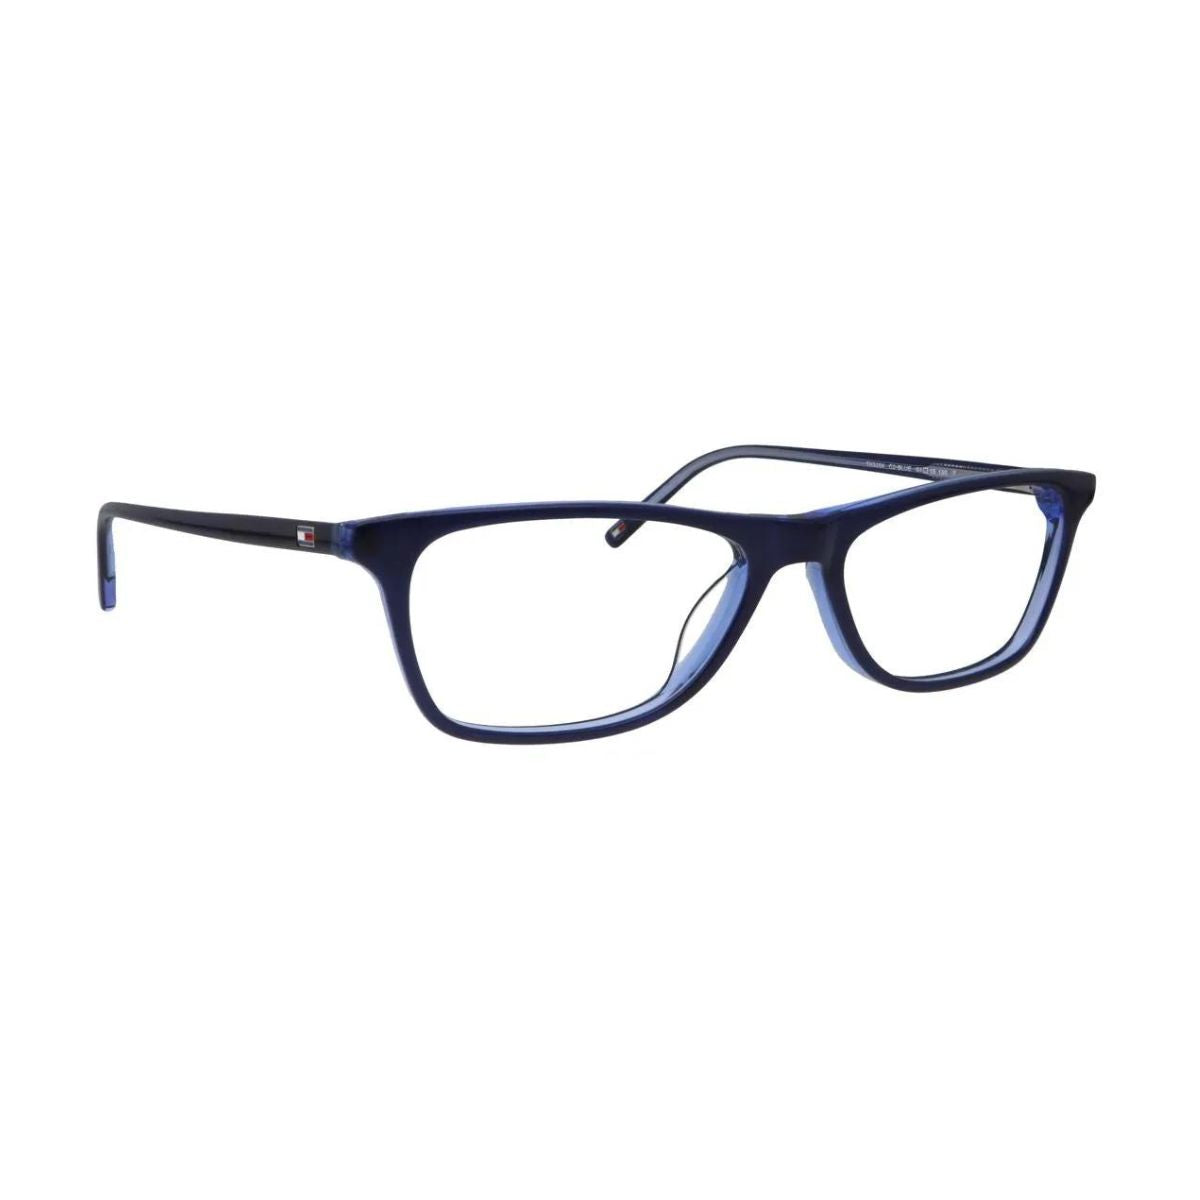 "Tommy Hilfiger 3204 C4 online glasses frame for men and women at optorium"